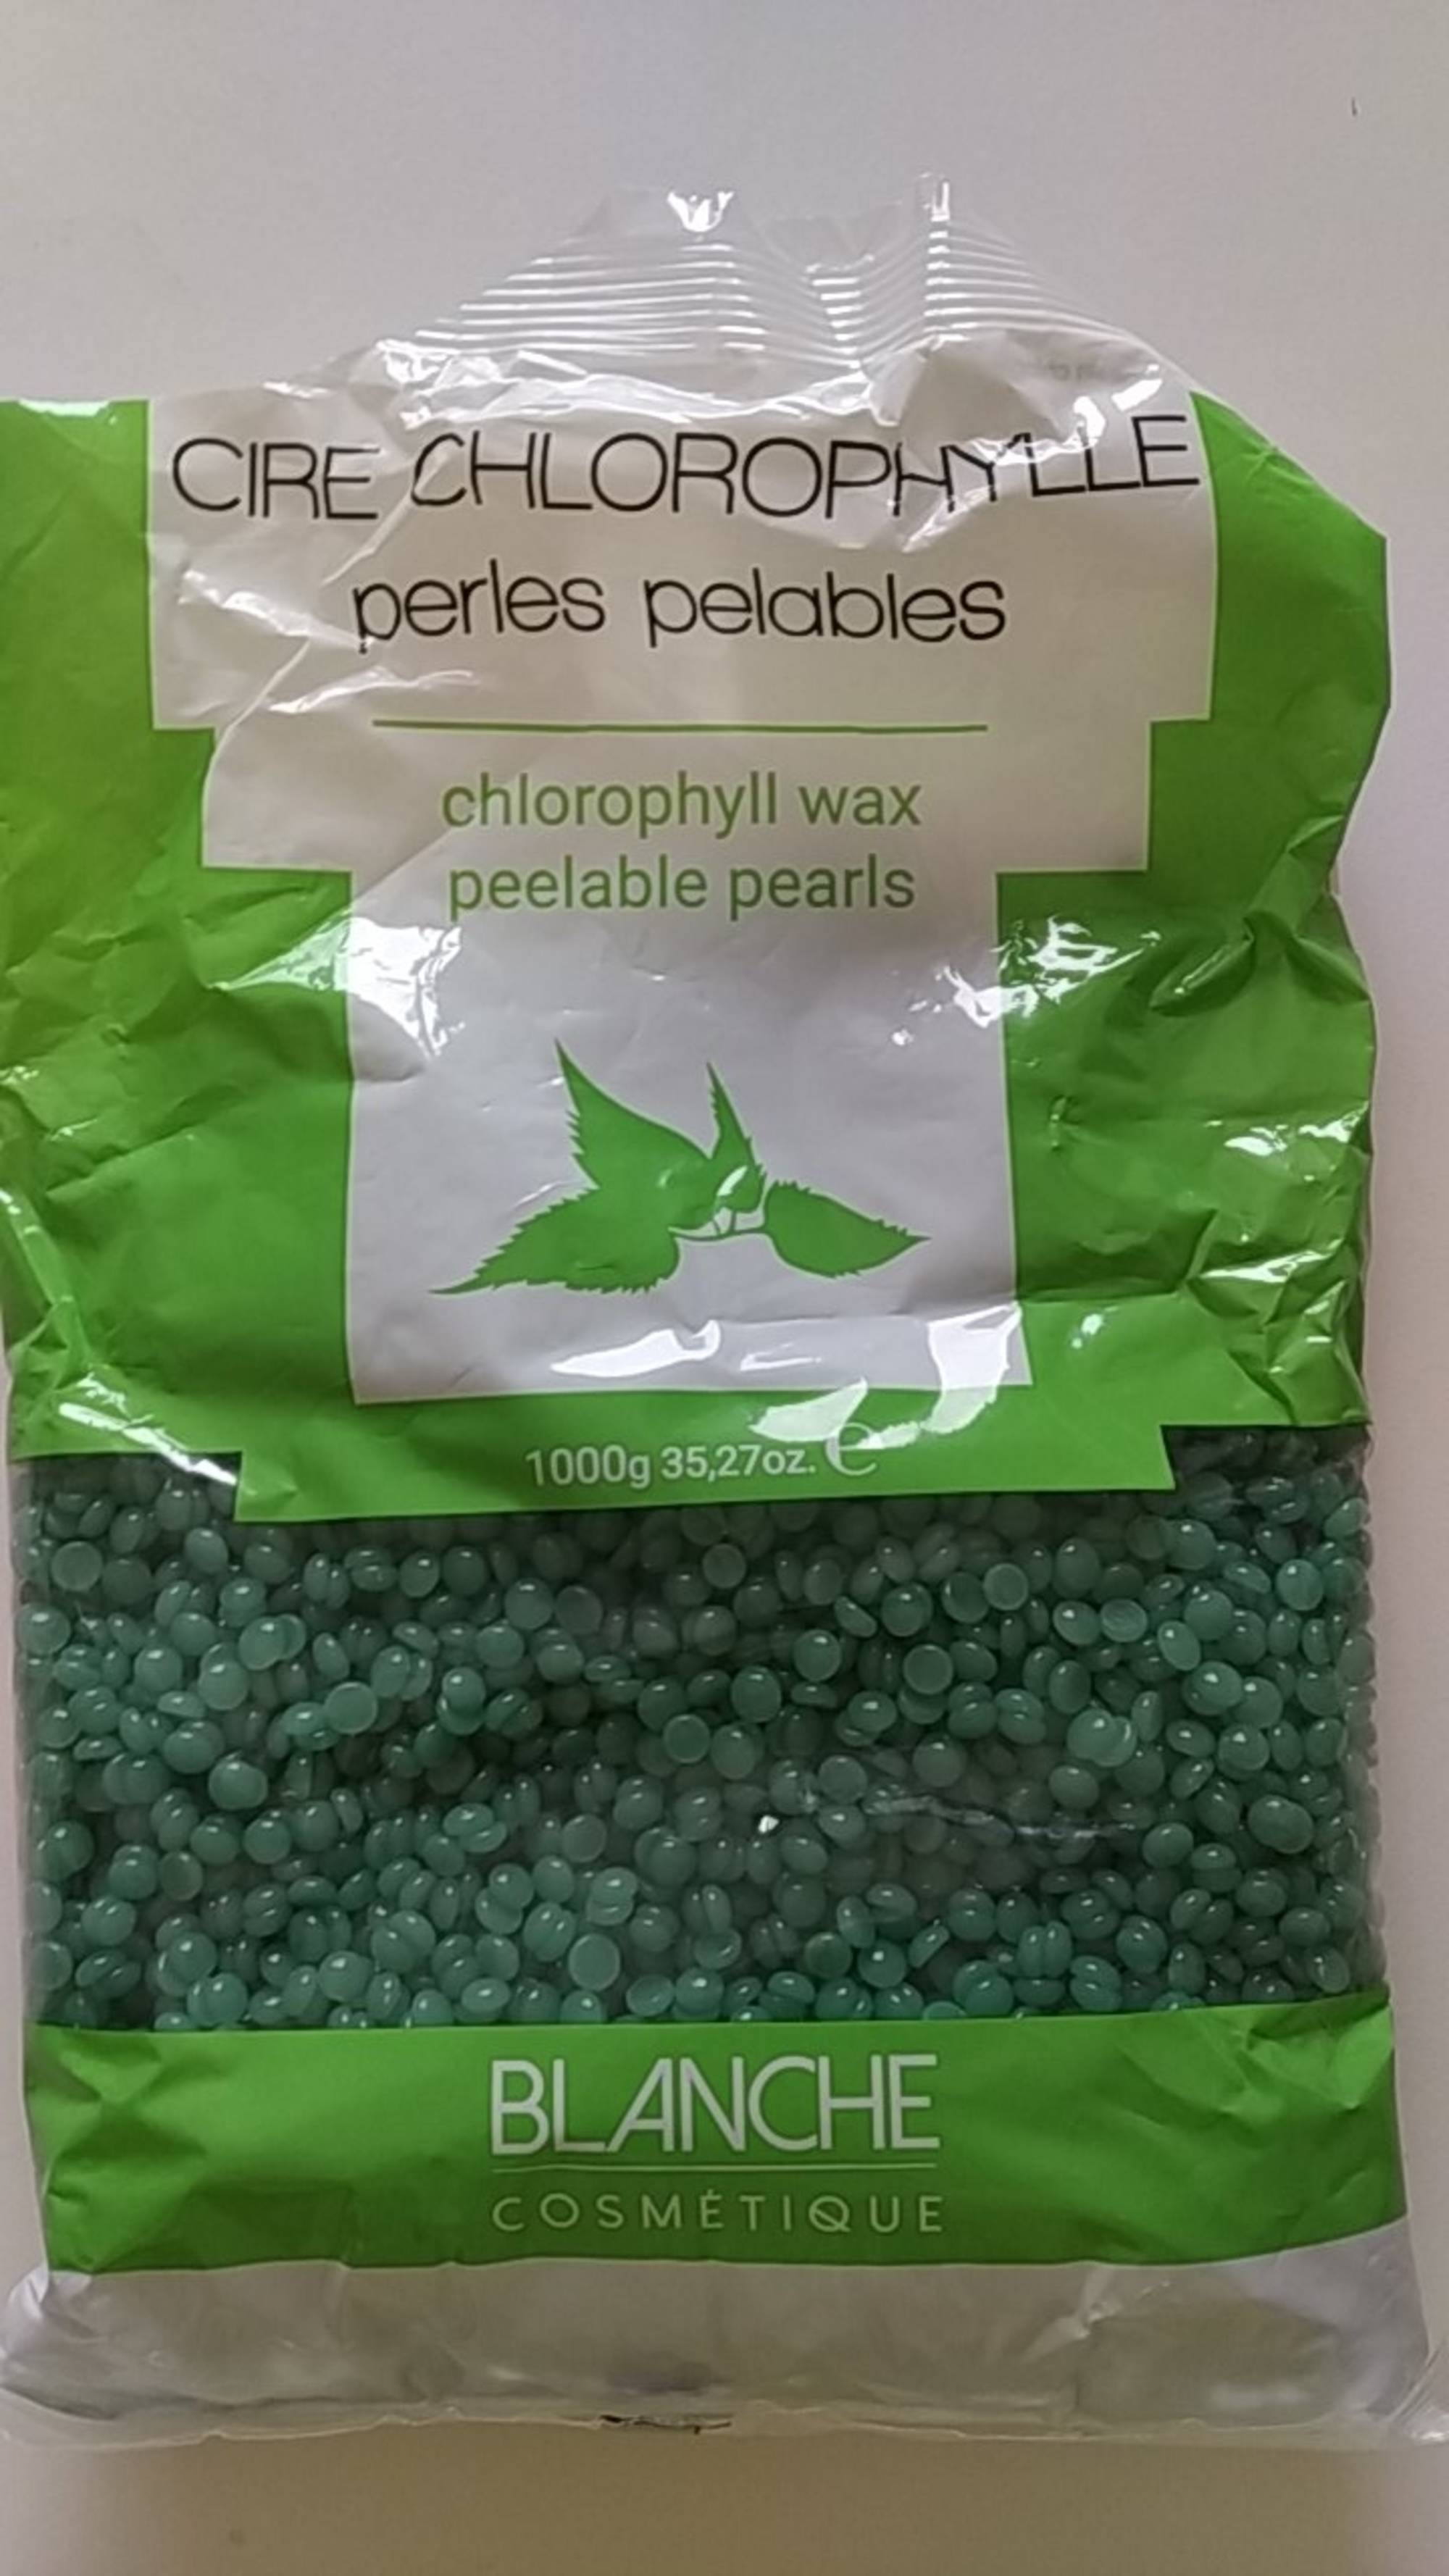 BLANCHE COSMETIQUE - Cire chlorophylle perles pelables